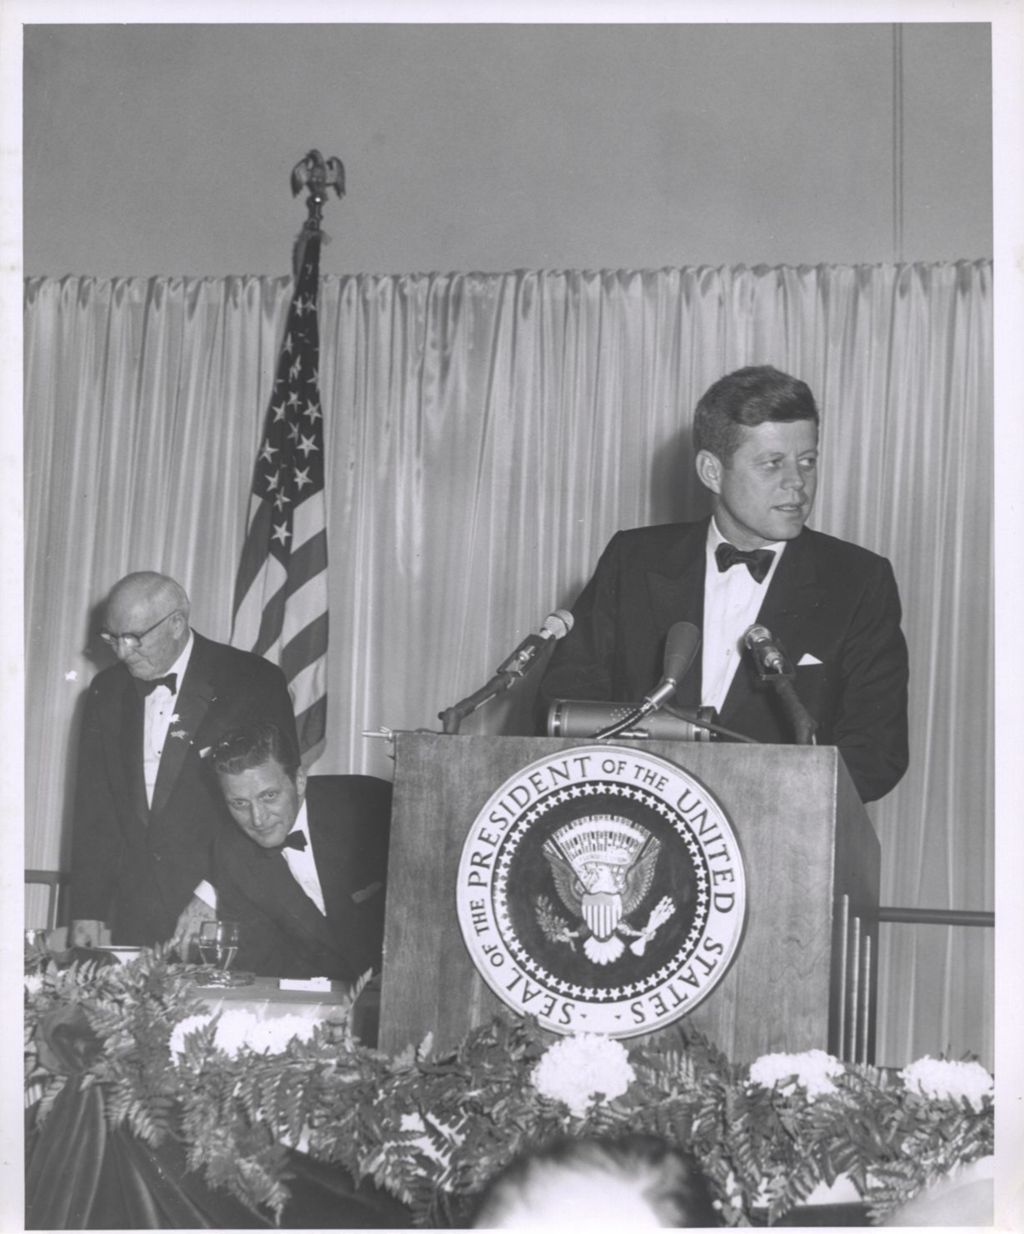 Miniature of President John F. Kennedy speaking at Democratic fundraising dinner